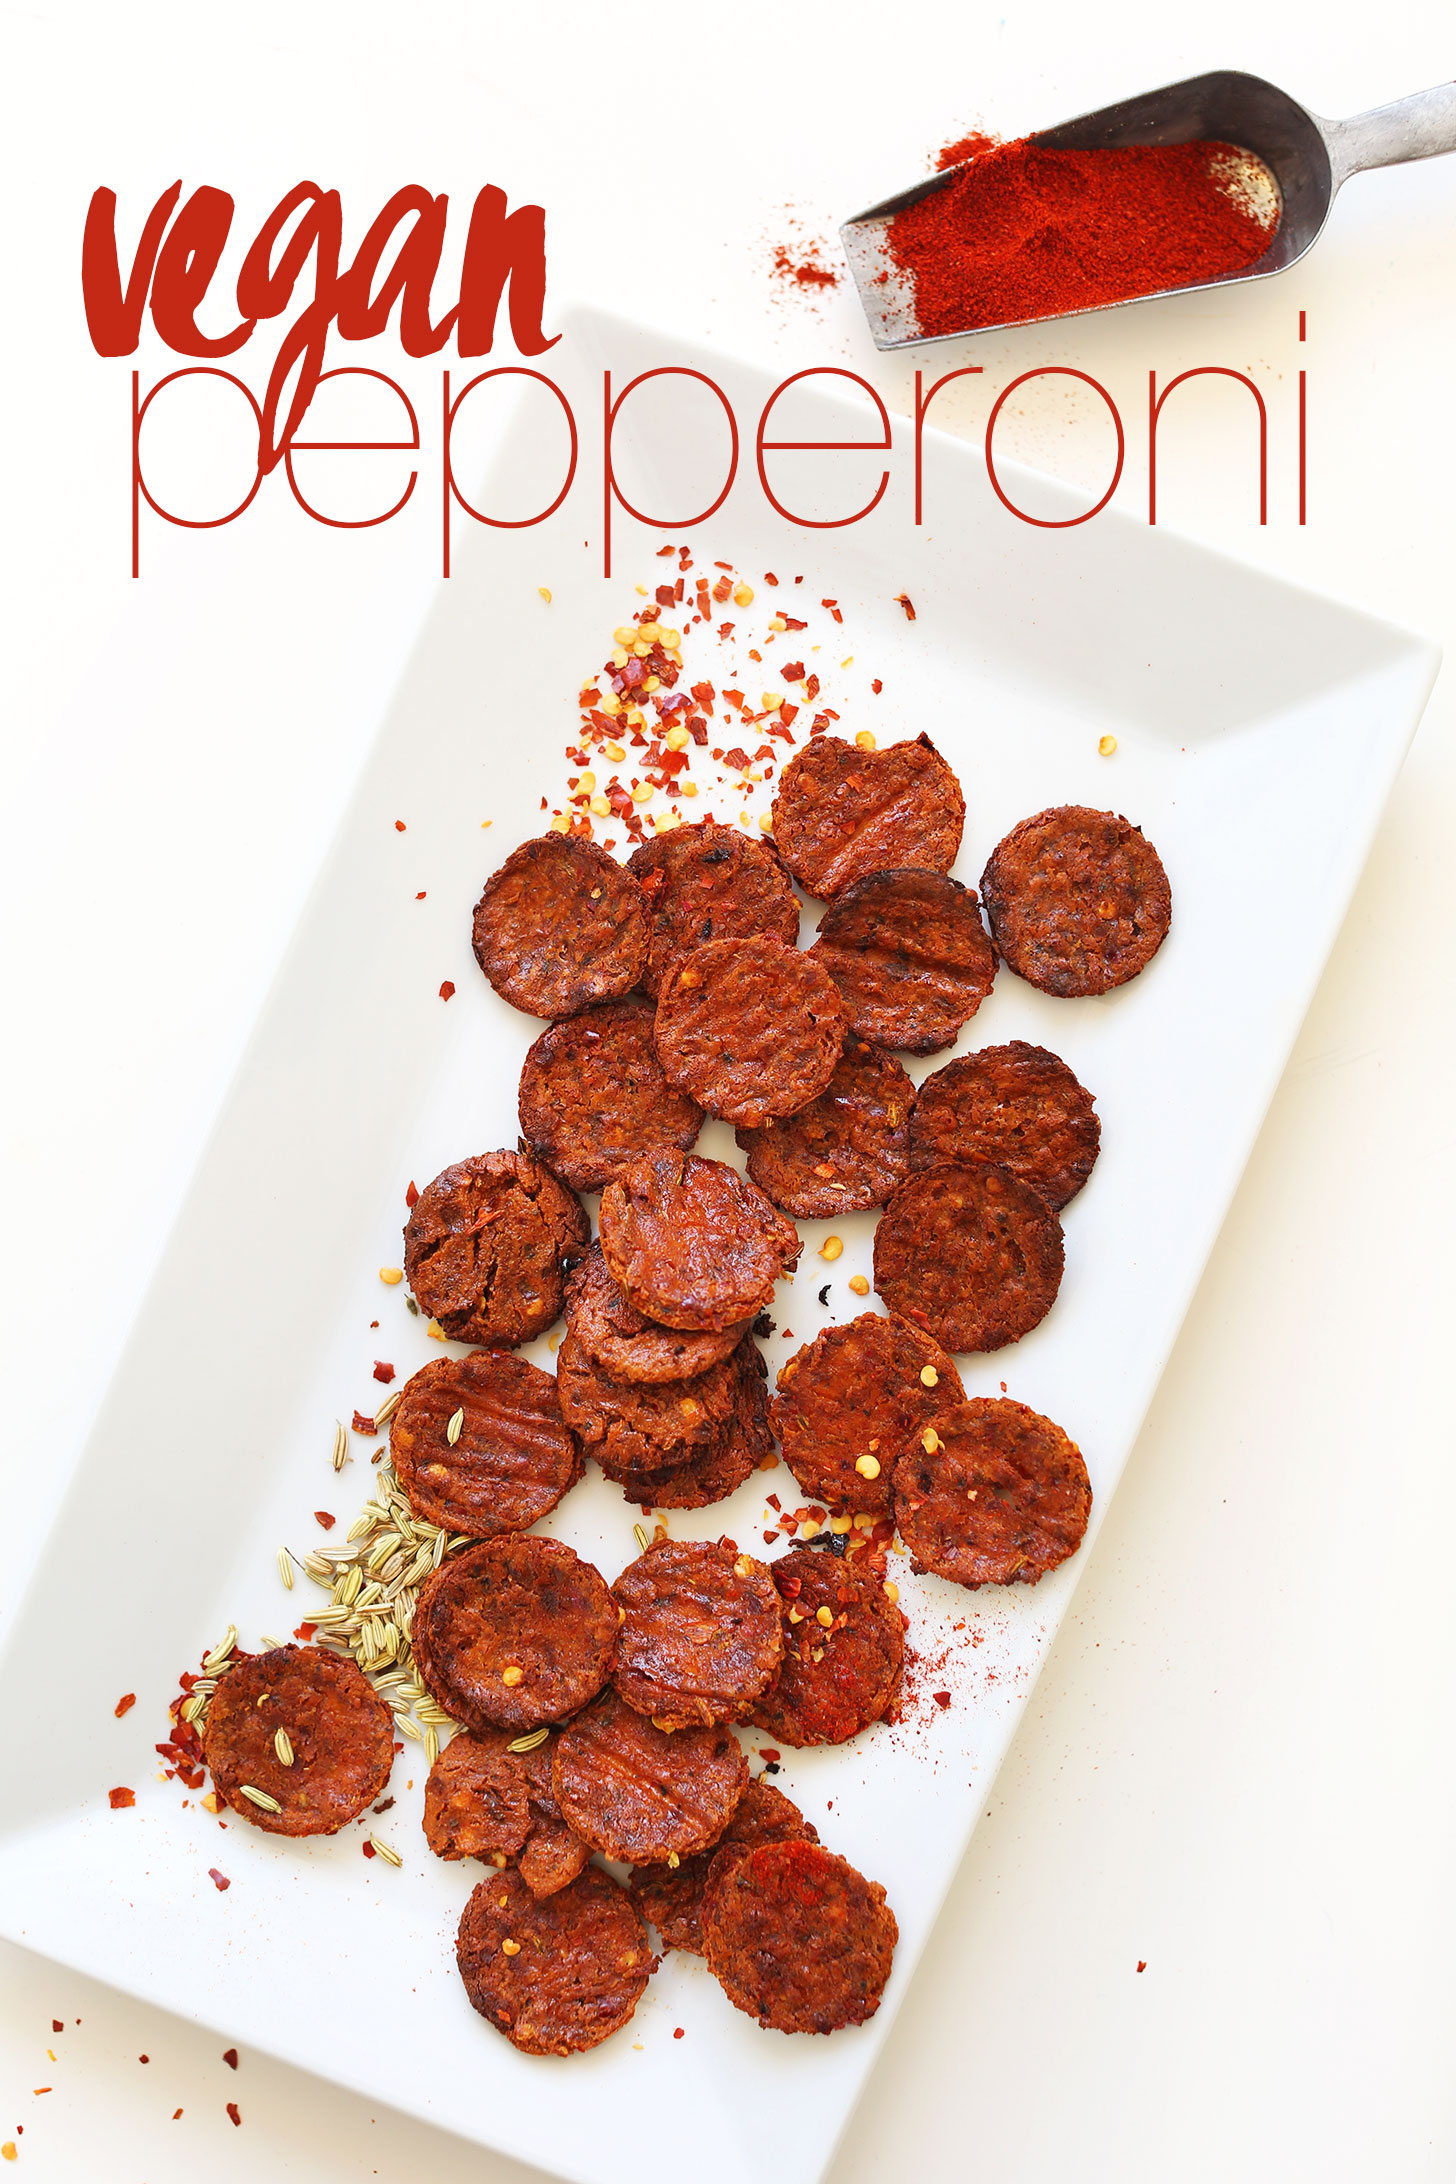 Ceramic platter with slices of vegan pepperoni for making homemade pizza